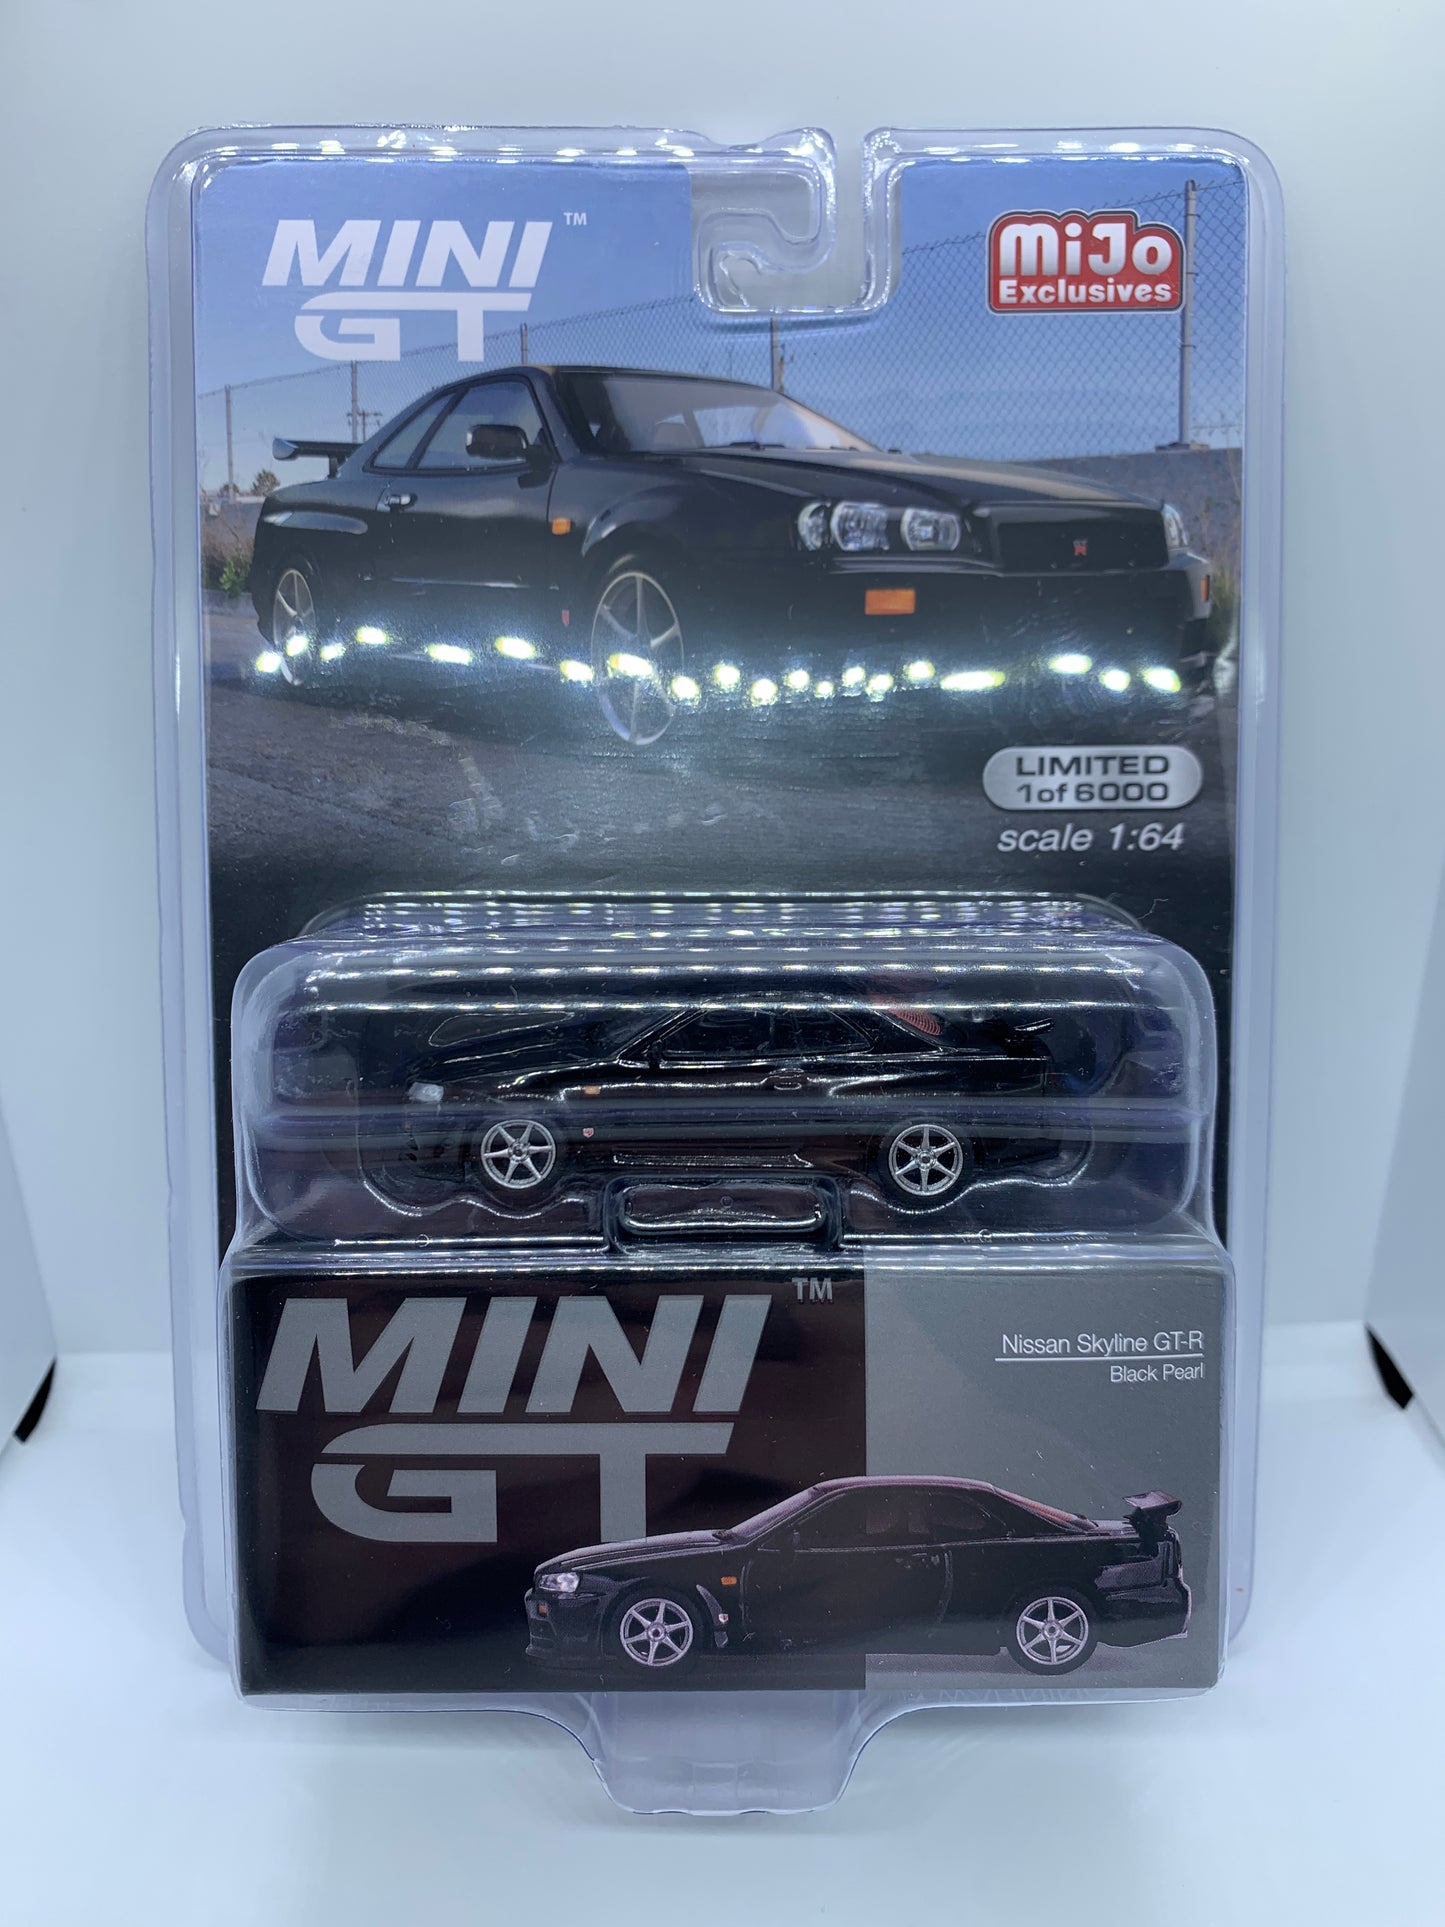 MINI GT - Nissan Skyline R34 GT-R Black Pearl - Display Blister Packaging